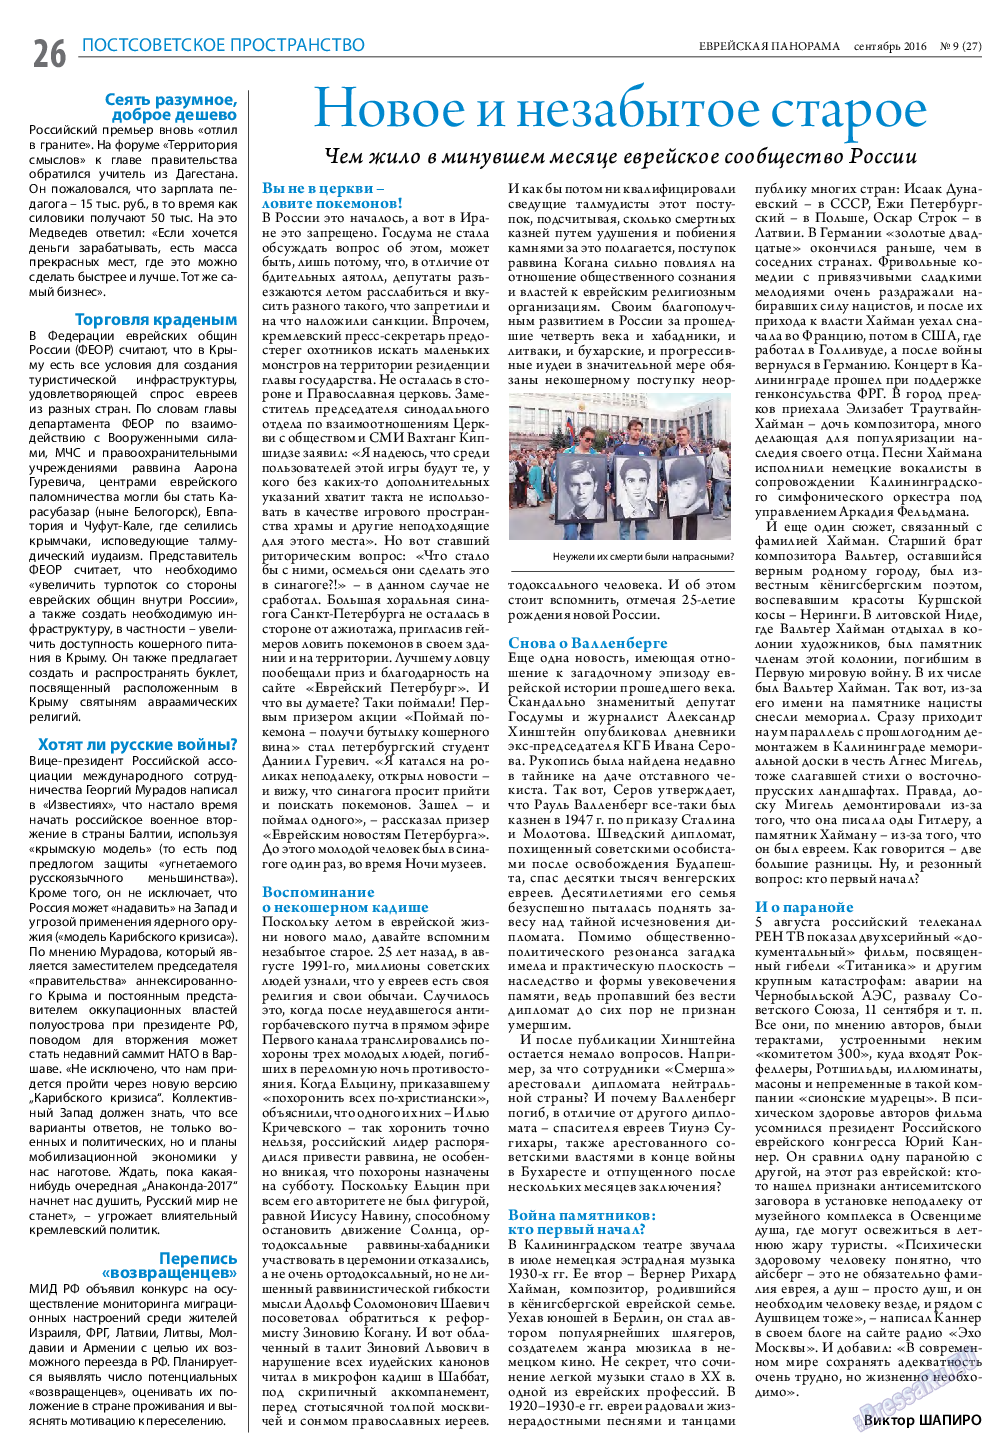 Еврейская панорама, газета. 2016 №9 стр.26